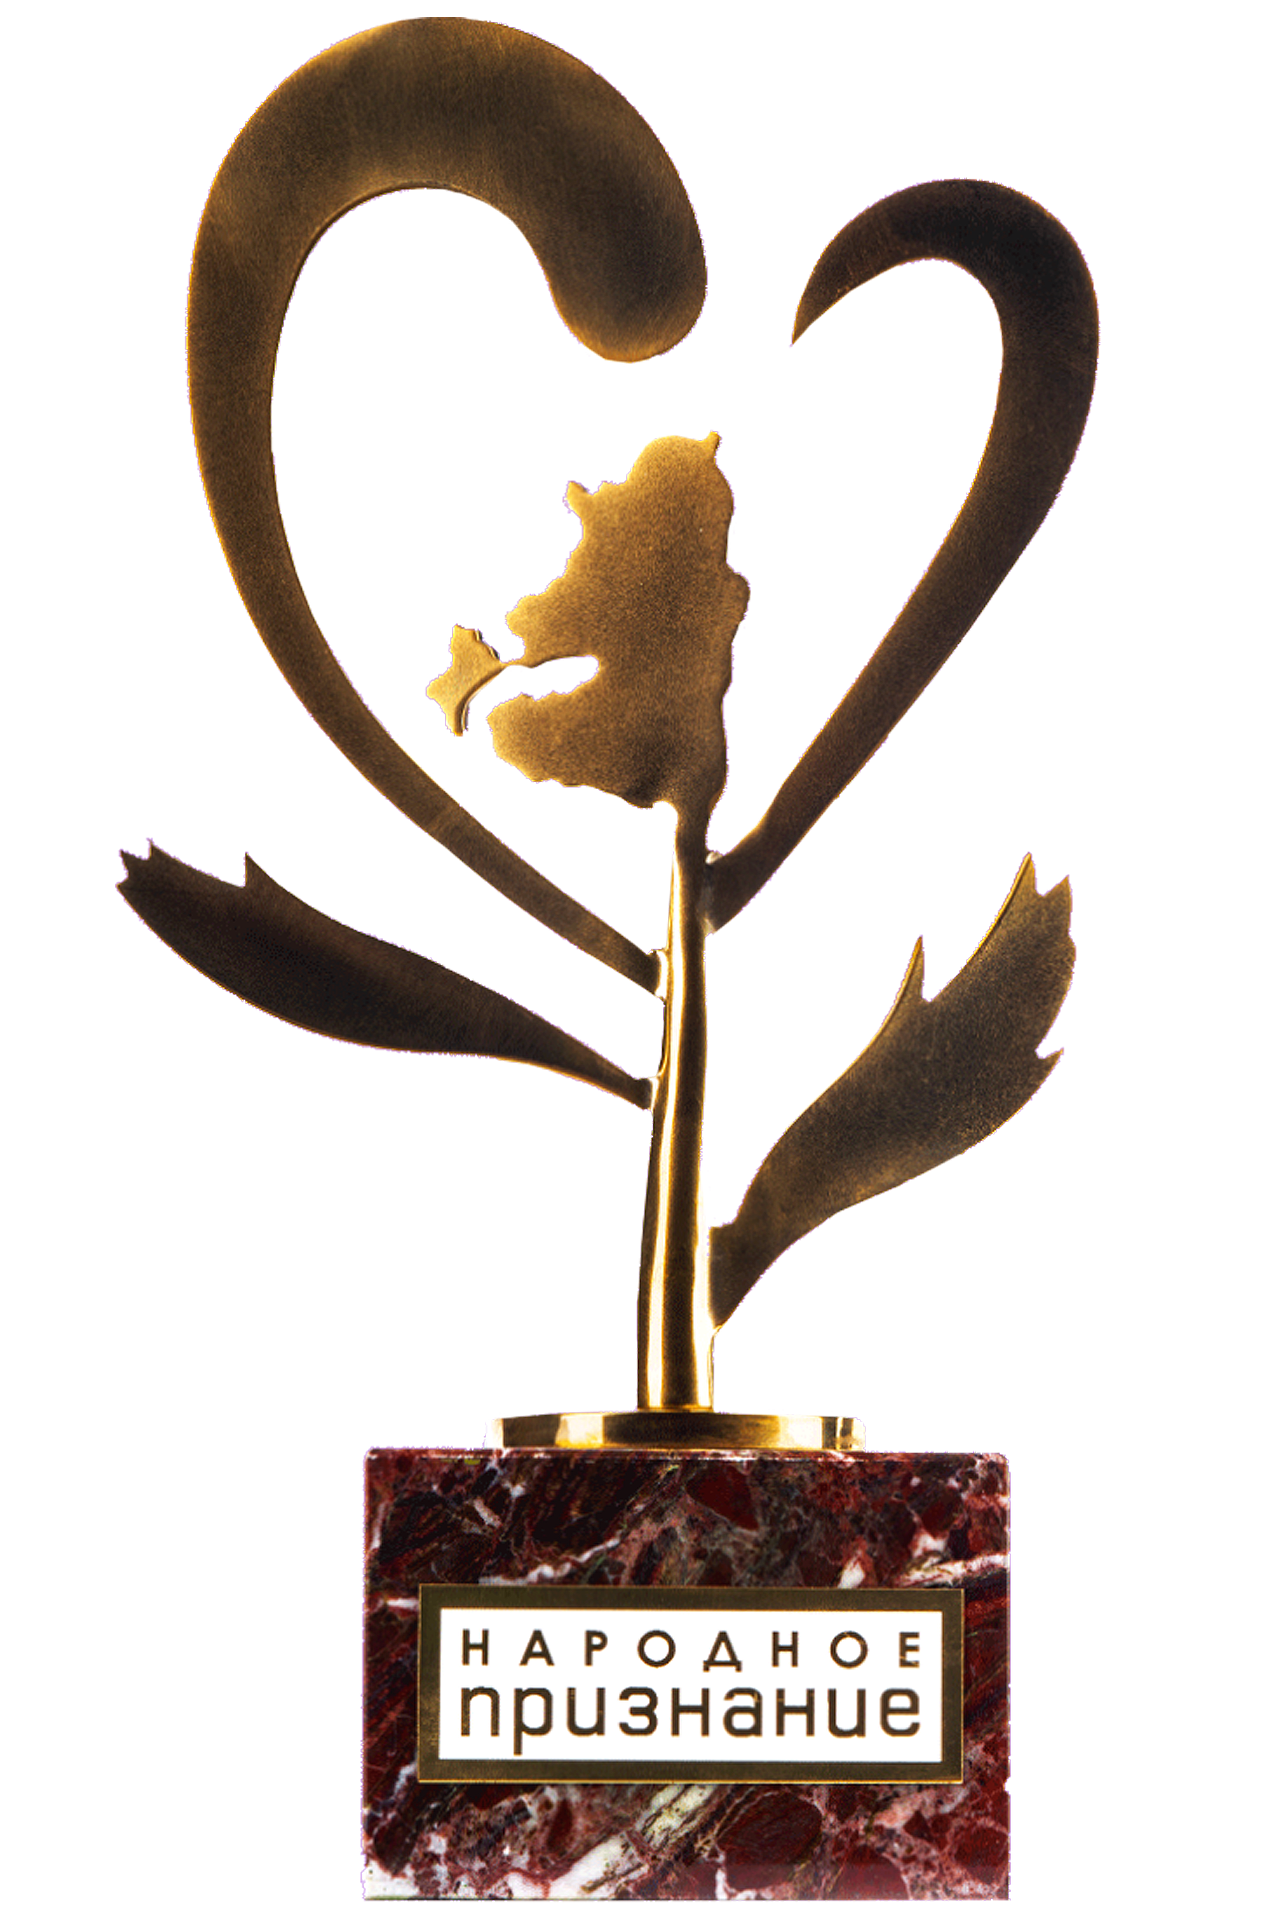 Laureate of “Public Recognition” Award